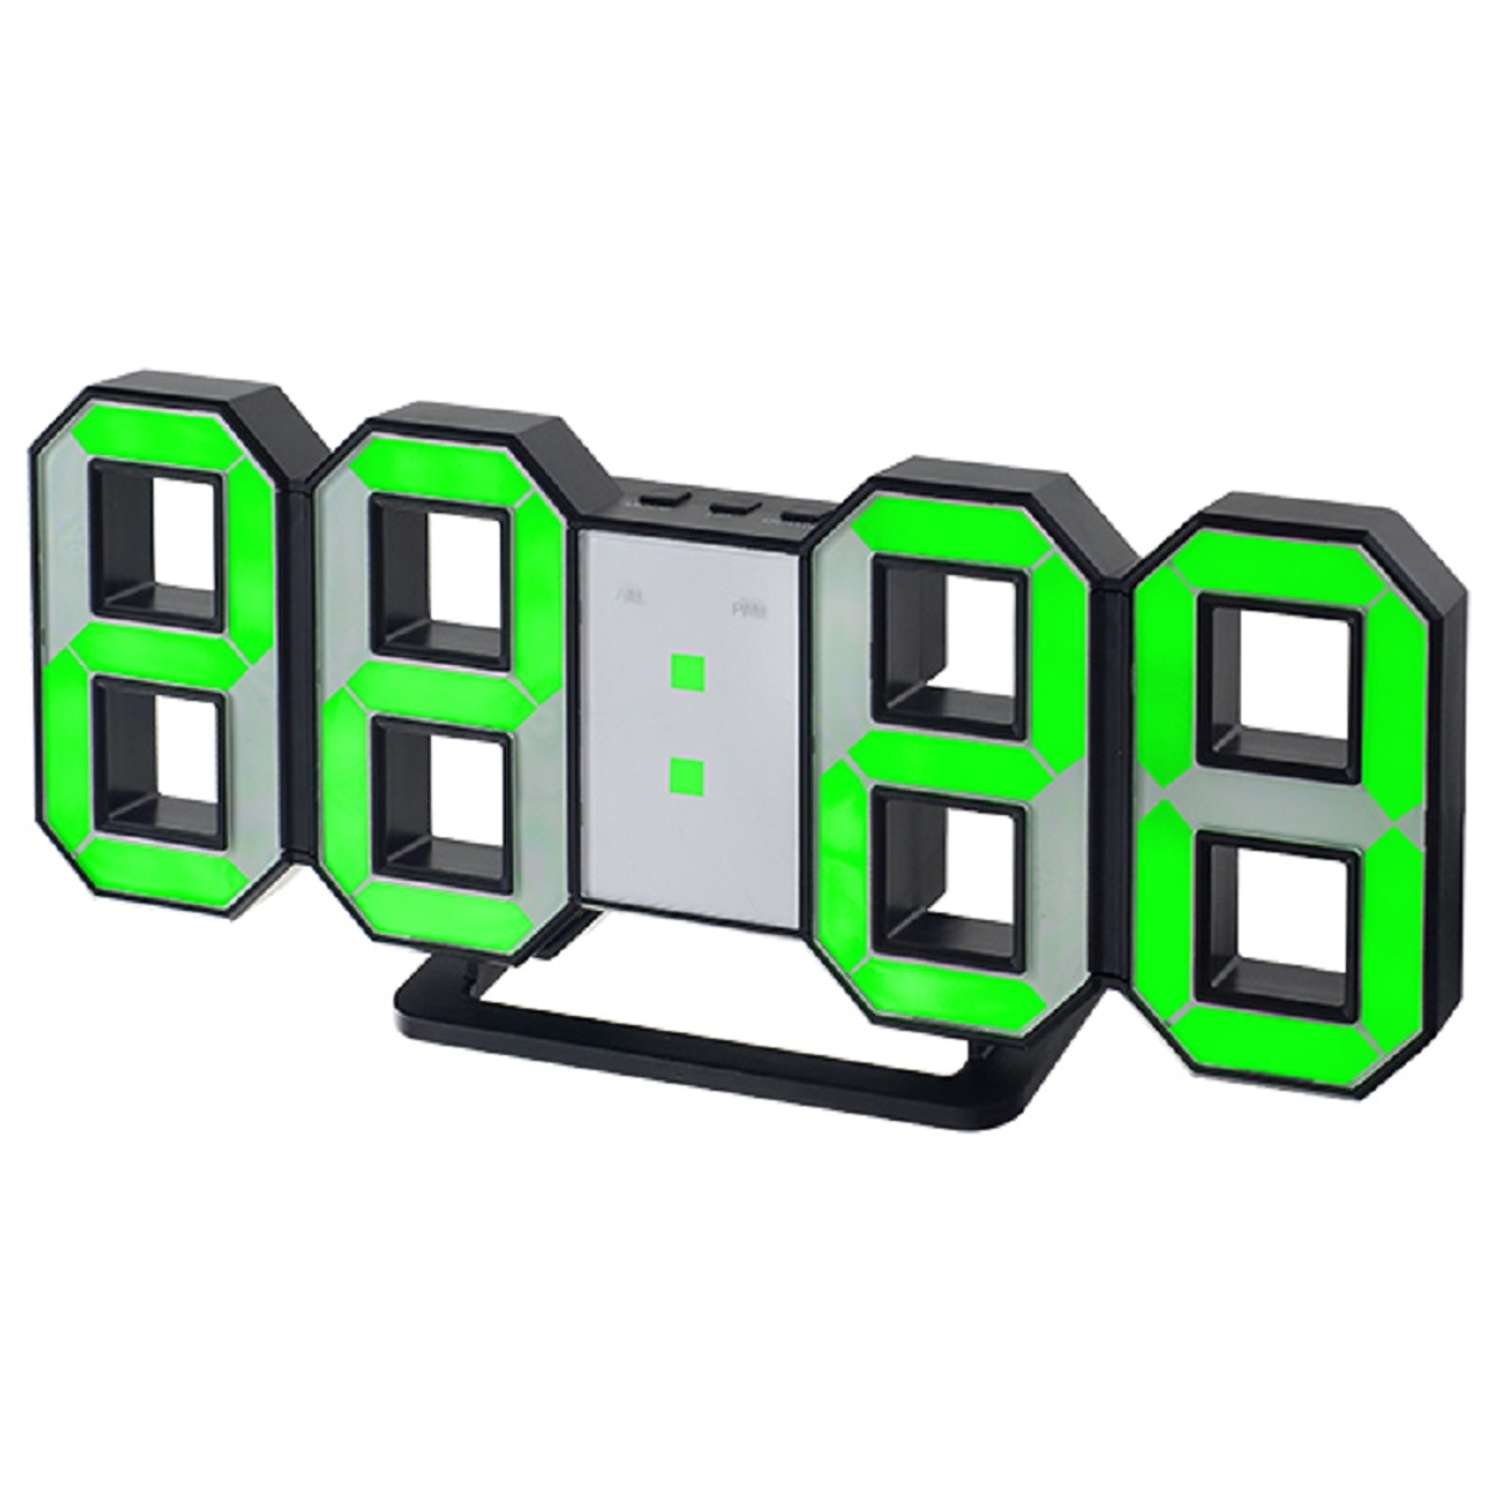 LED часы-будильник Perfeo LUMINOUS черный корпус зелёная подсветка PF-663 - фото 1